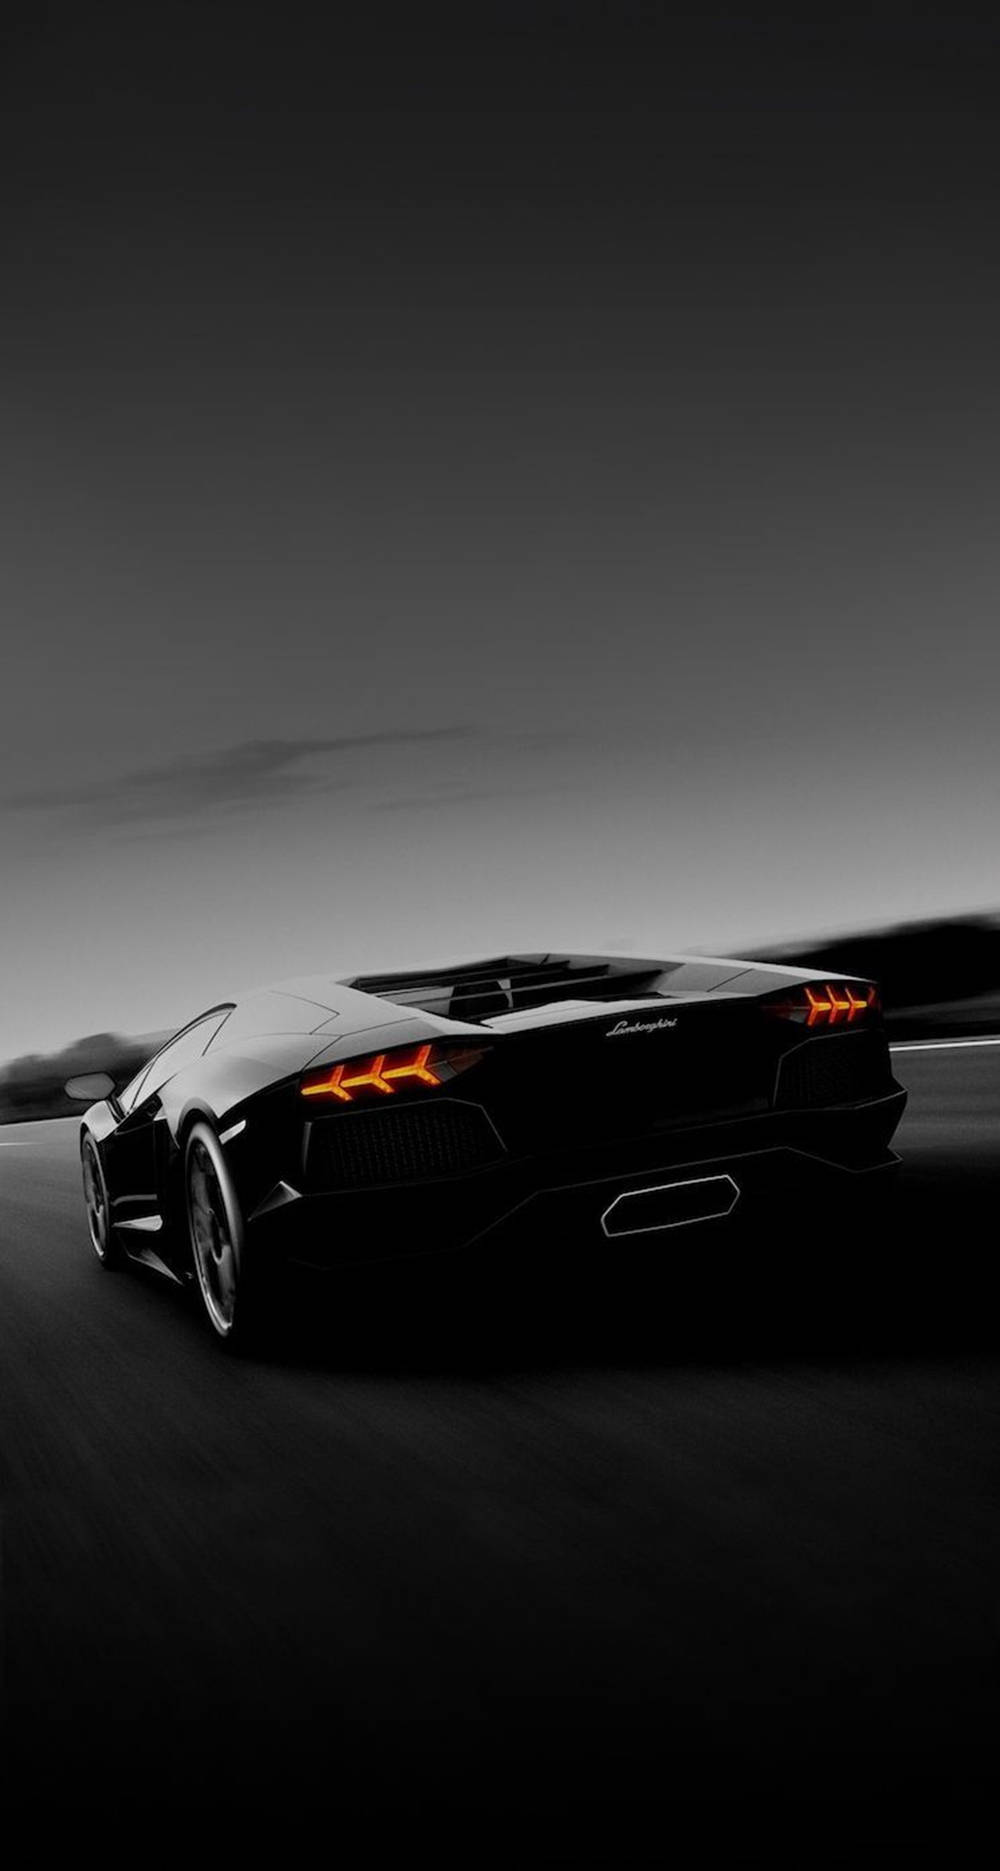 Mesmerizing Black Lamborghini Iphone Wallpaper Background